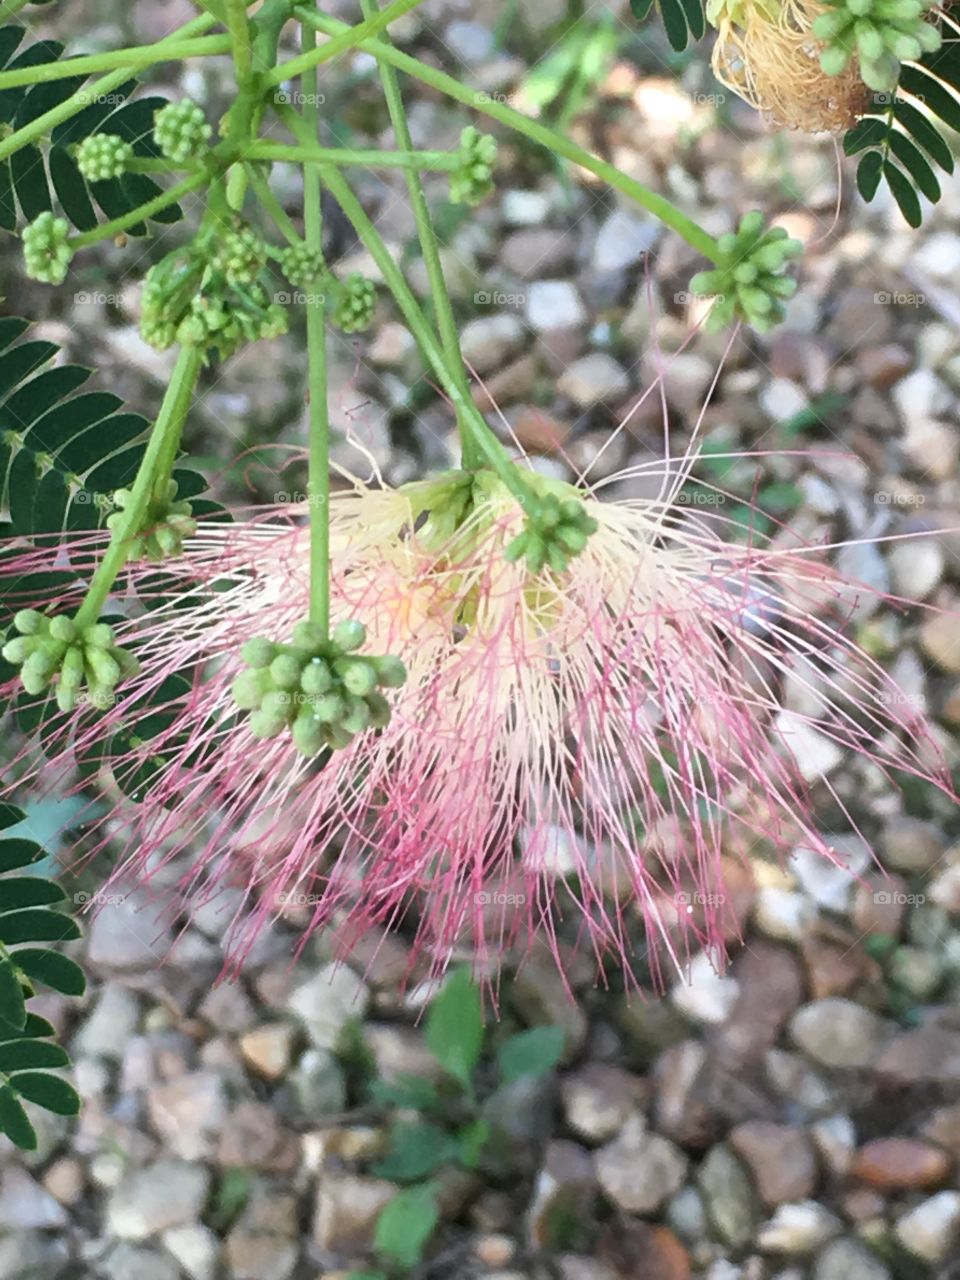 Mimosa flower